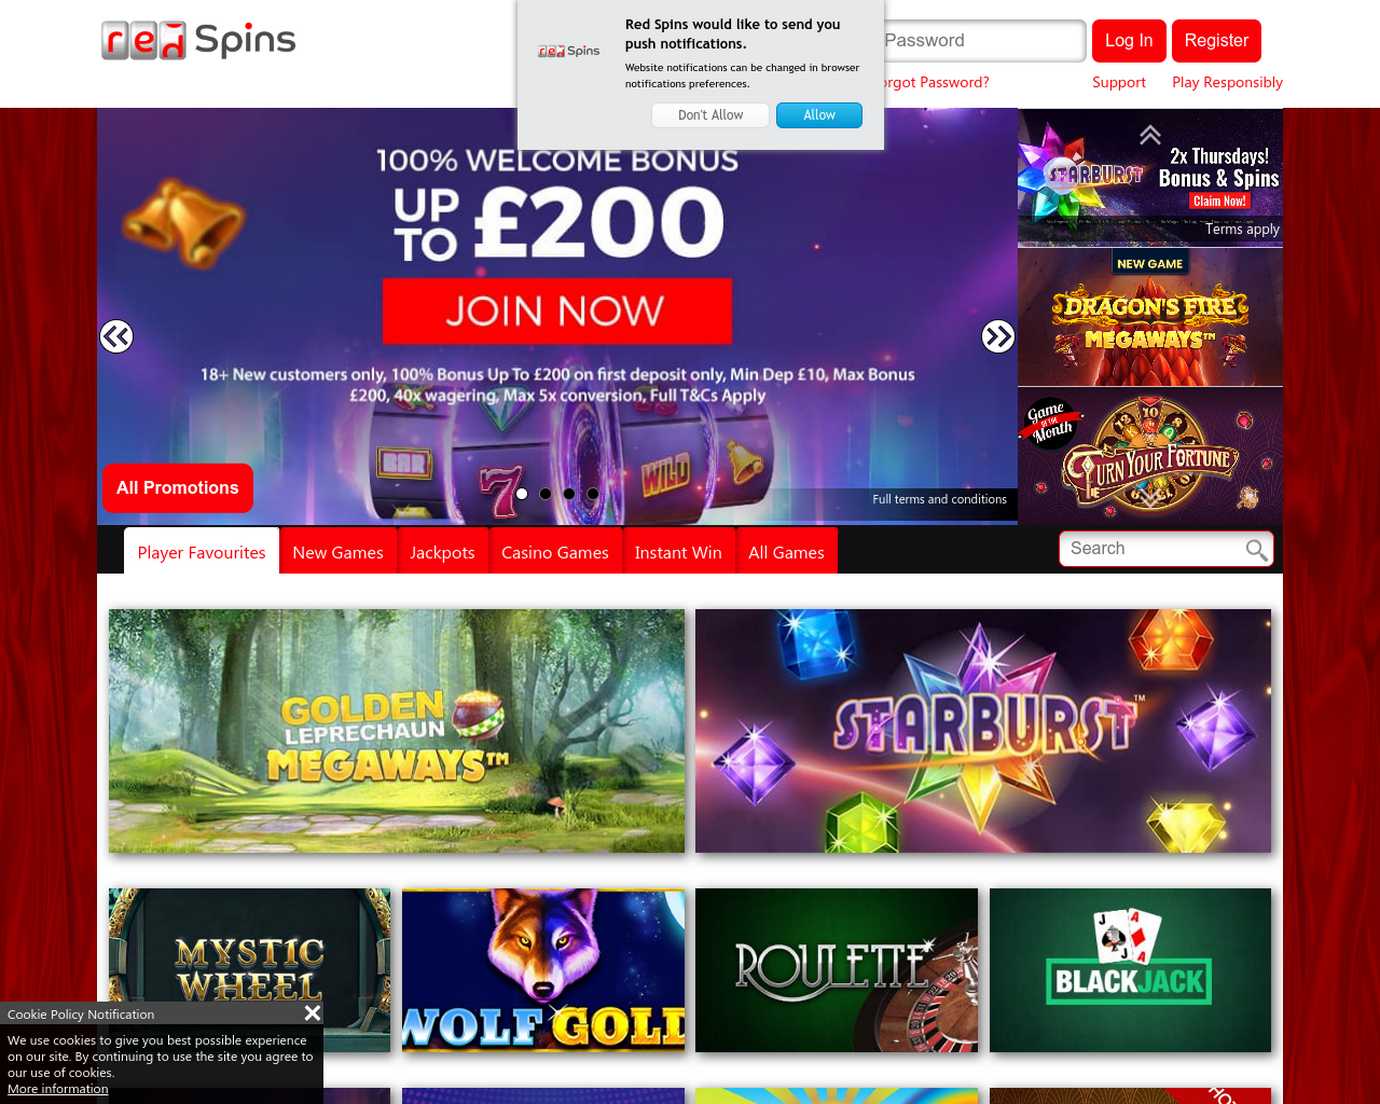 tropicana online casino signup bonus